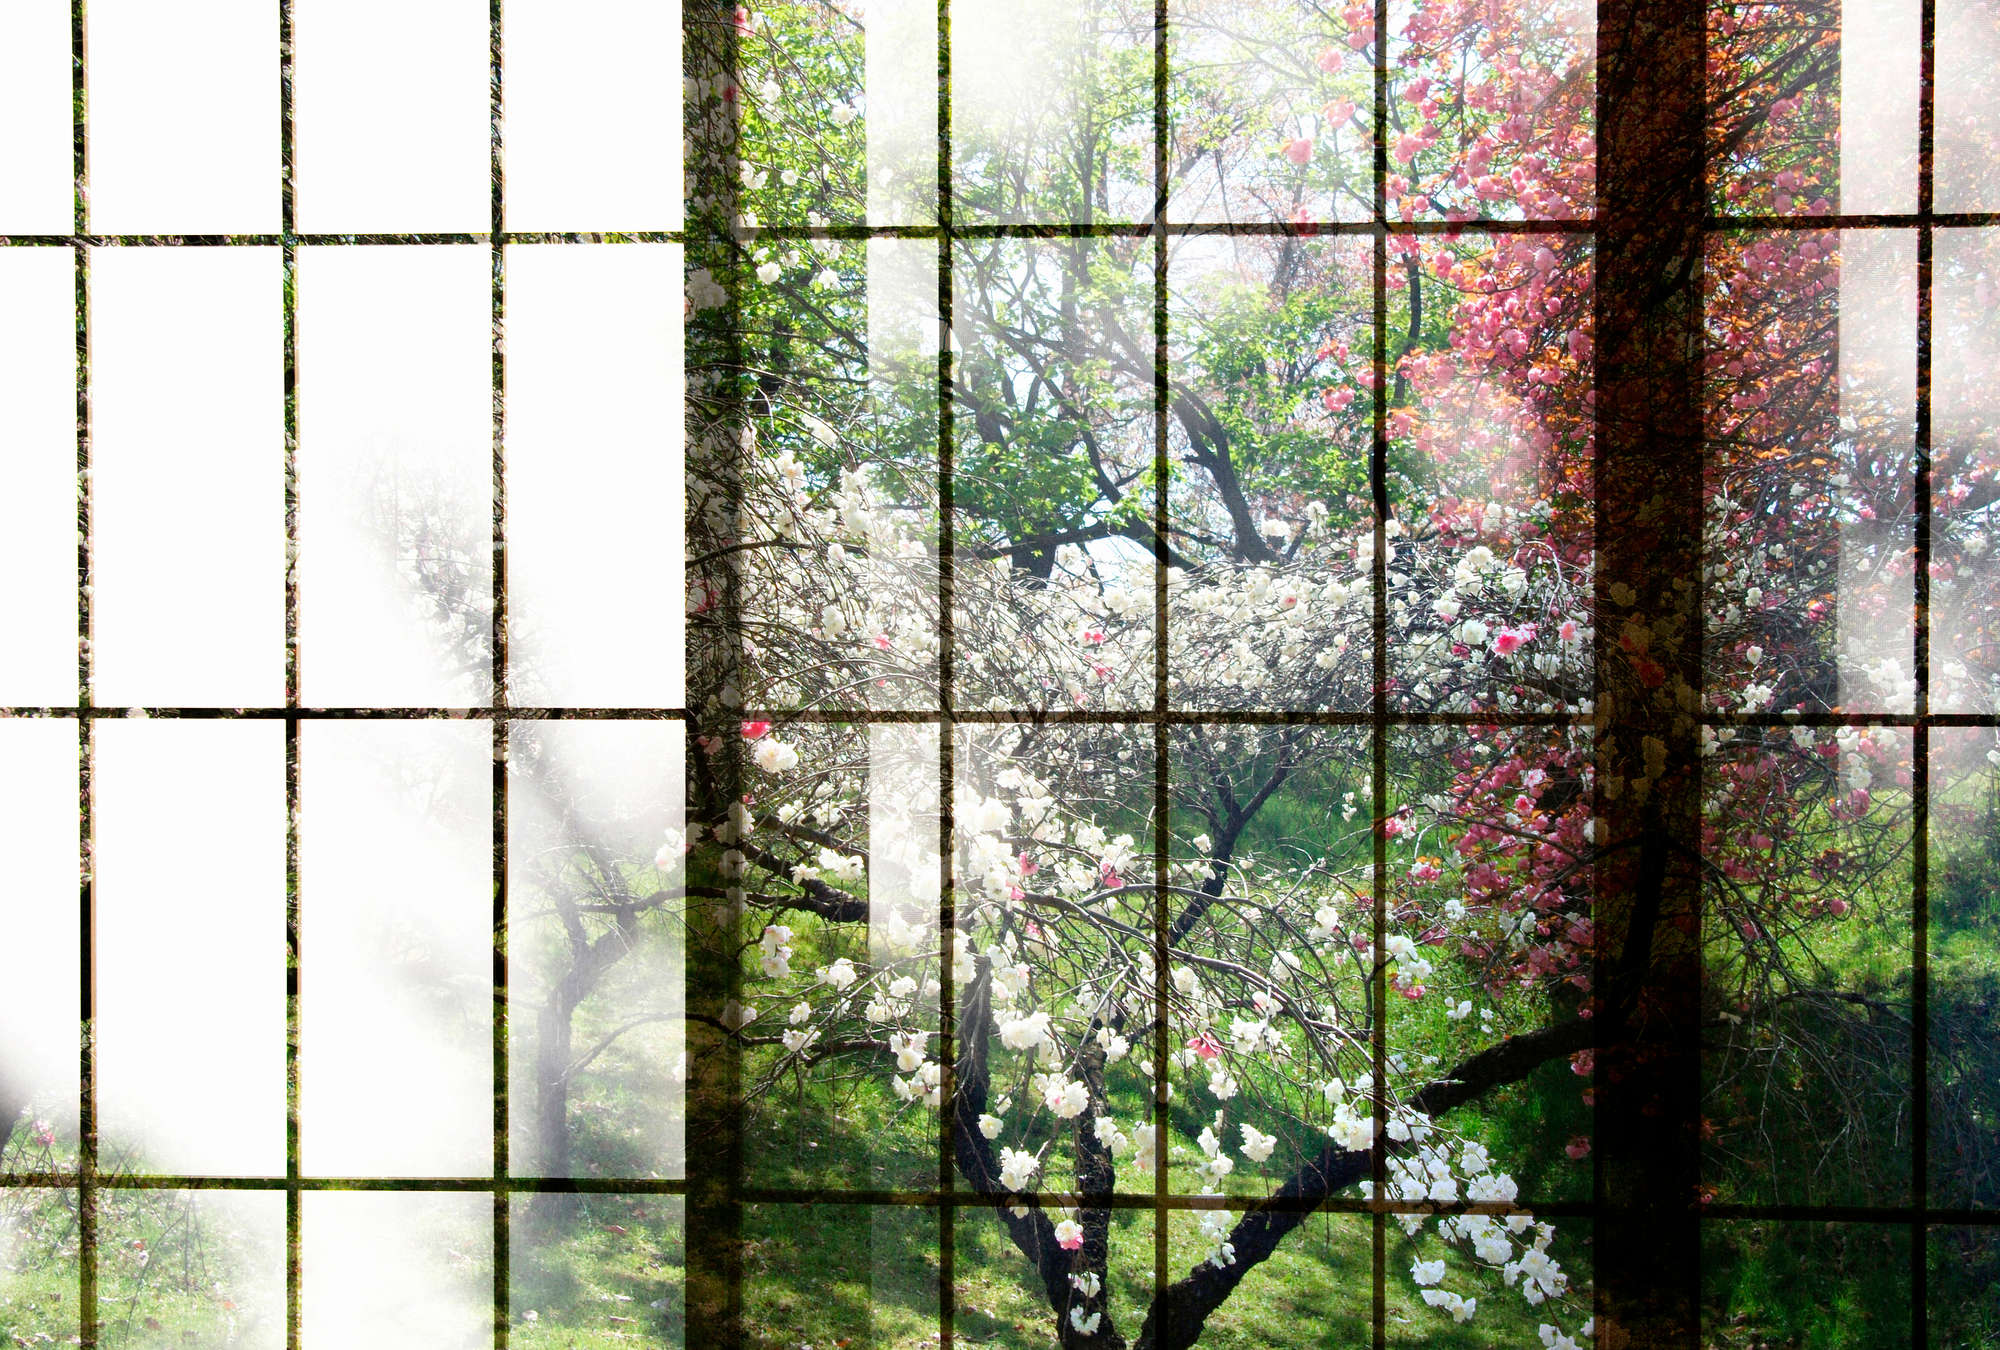             Orchard 2 - Fotomurali, Finestra con vista sul giardino - Verde, Rosa | Pile liscio premium
        